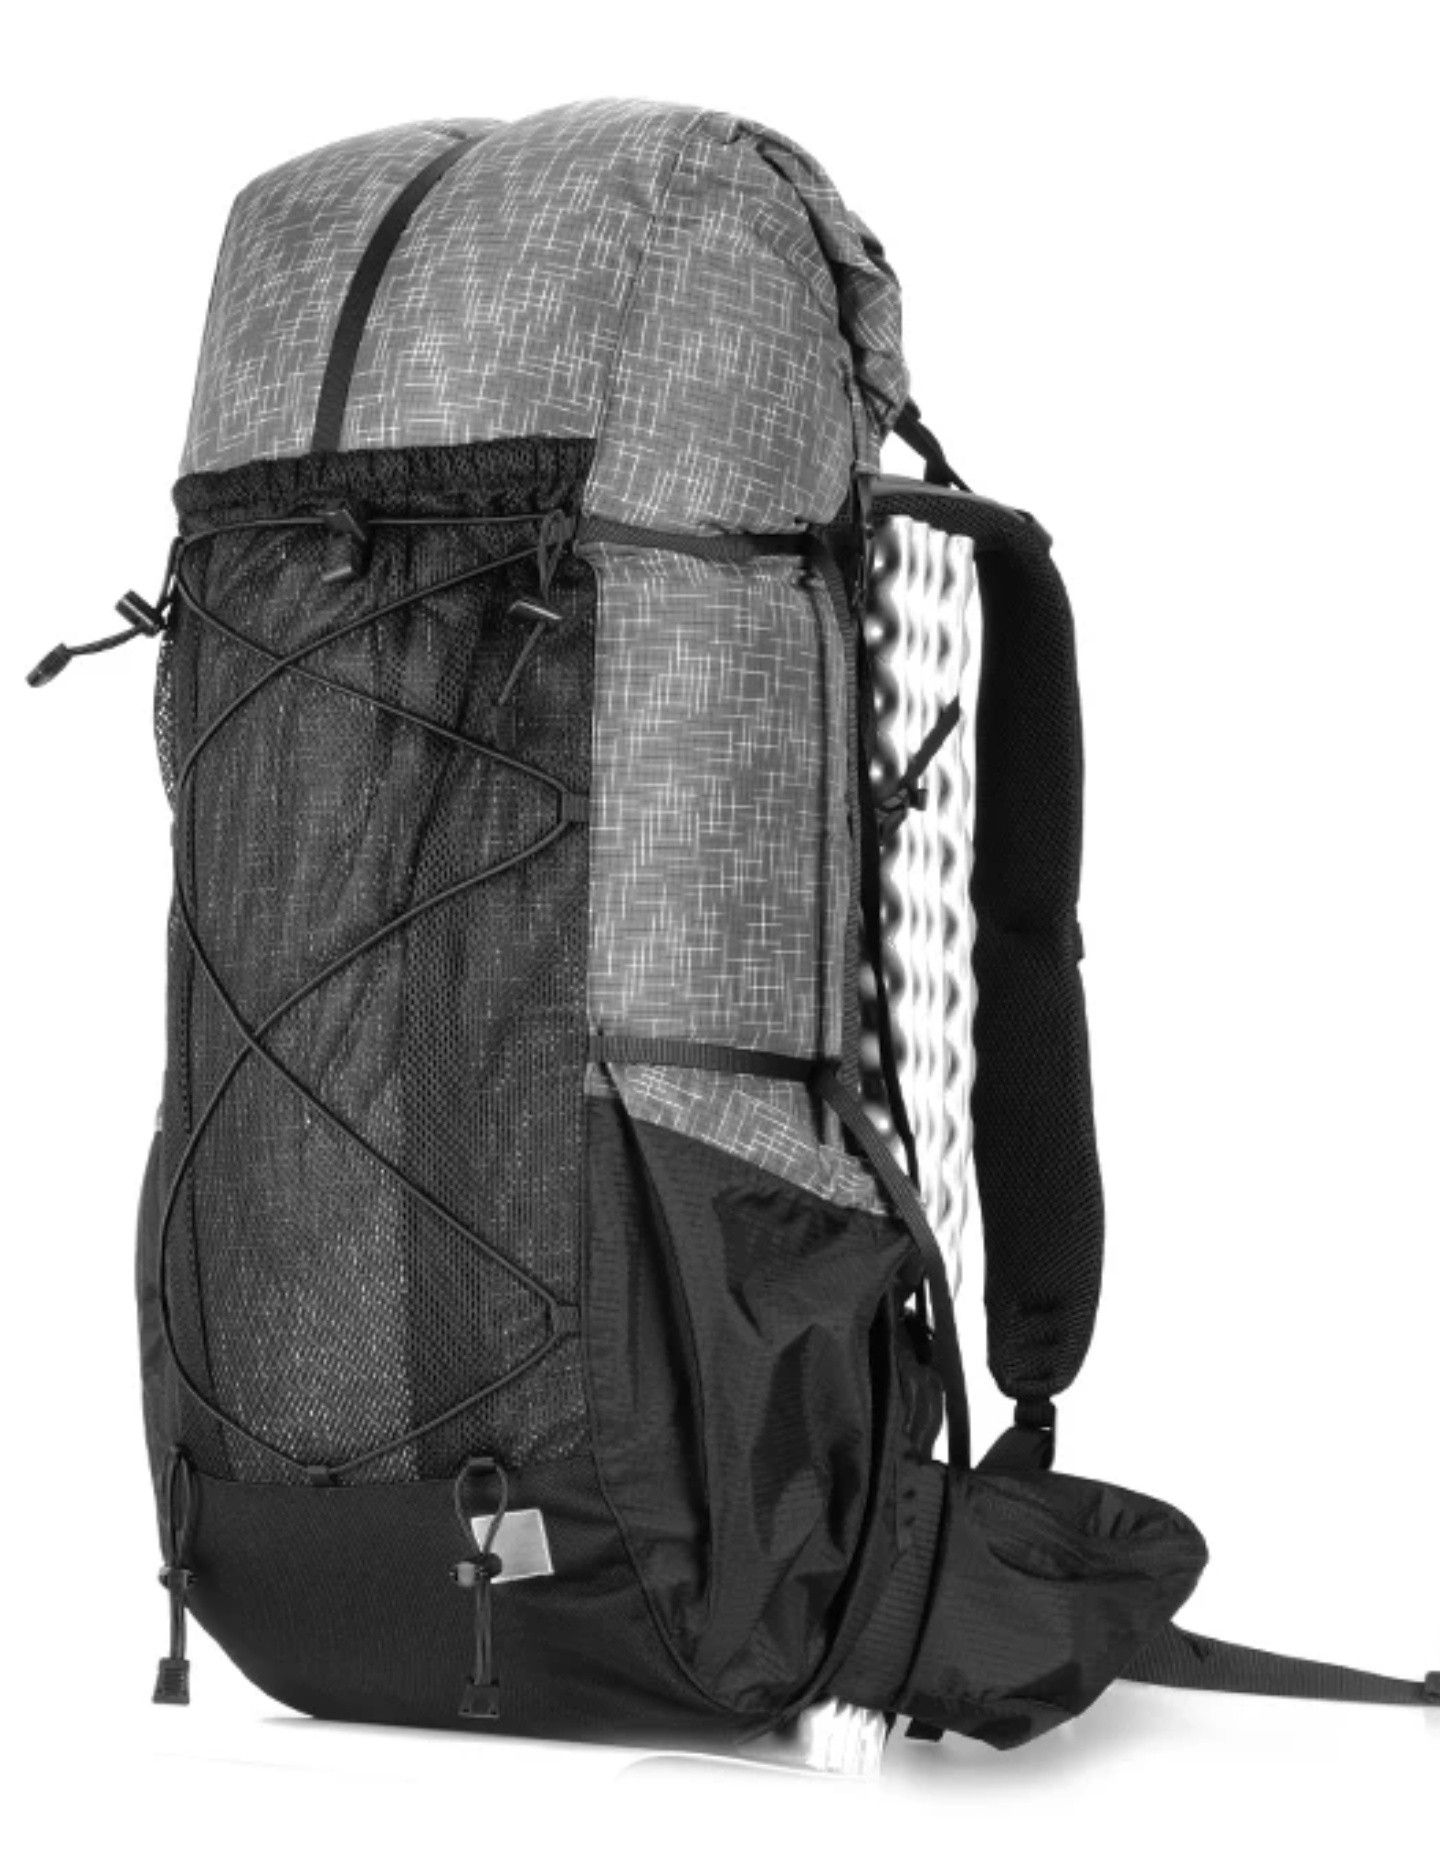 Ultralight Frameless Hiking Backpacking Backpack - Water Resistant - 56L